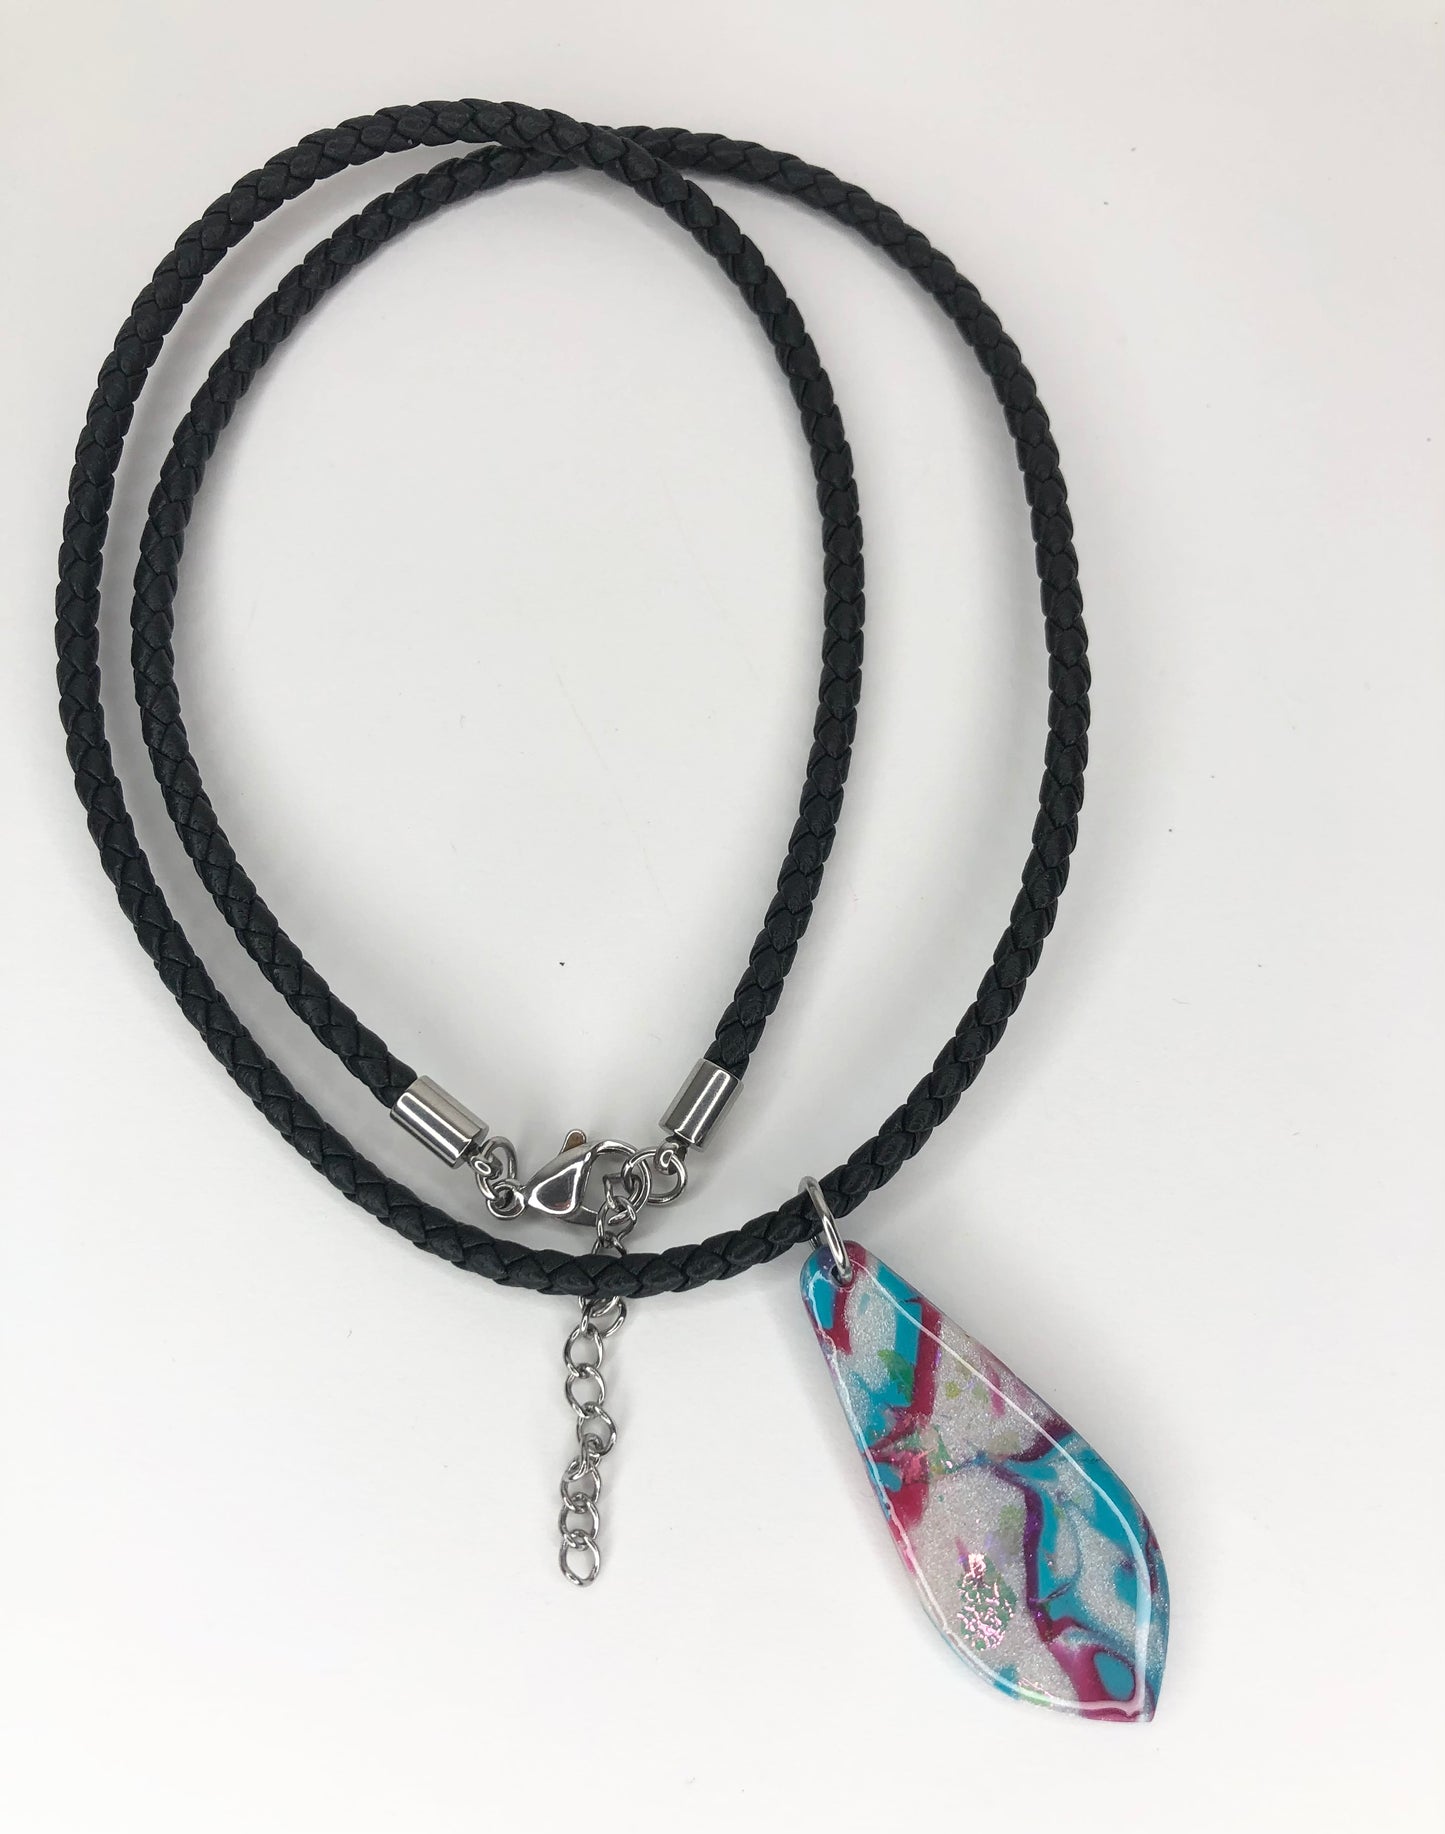 Taffy swirl necklace